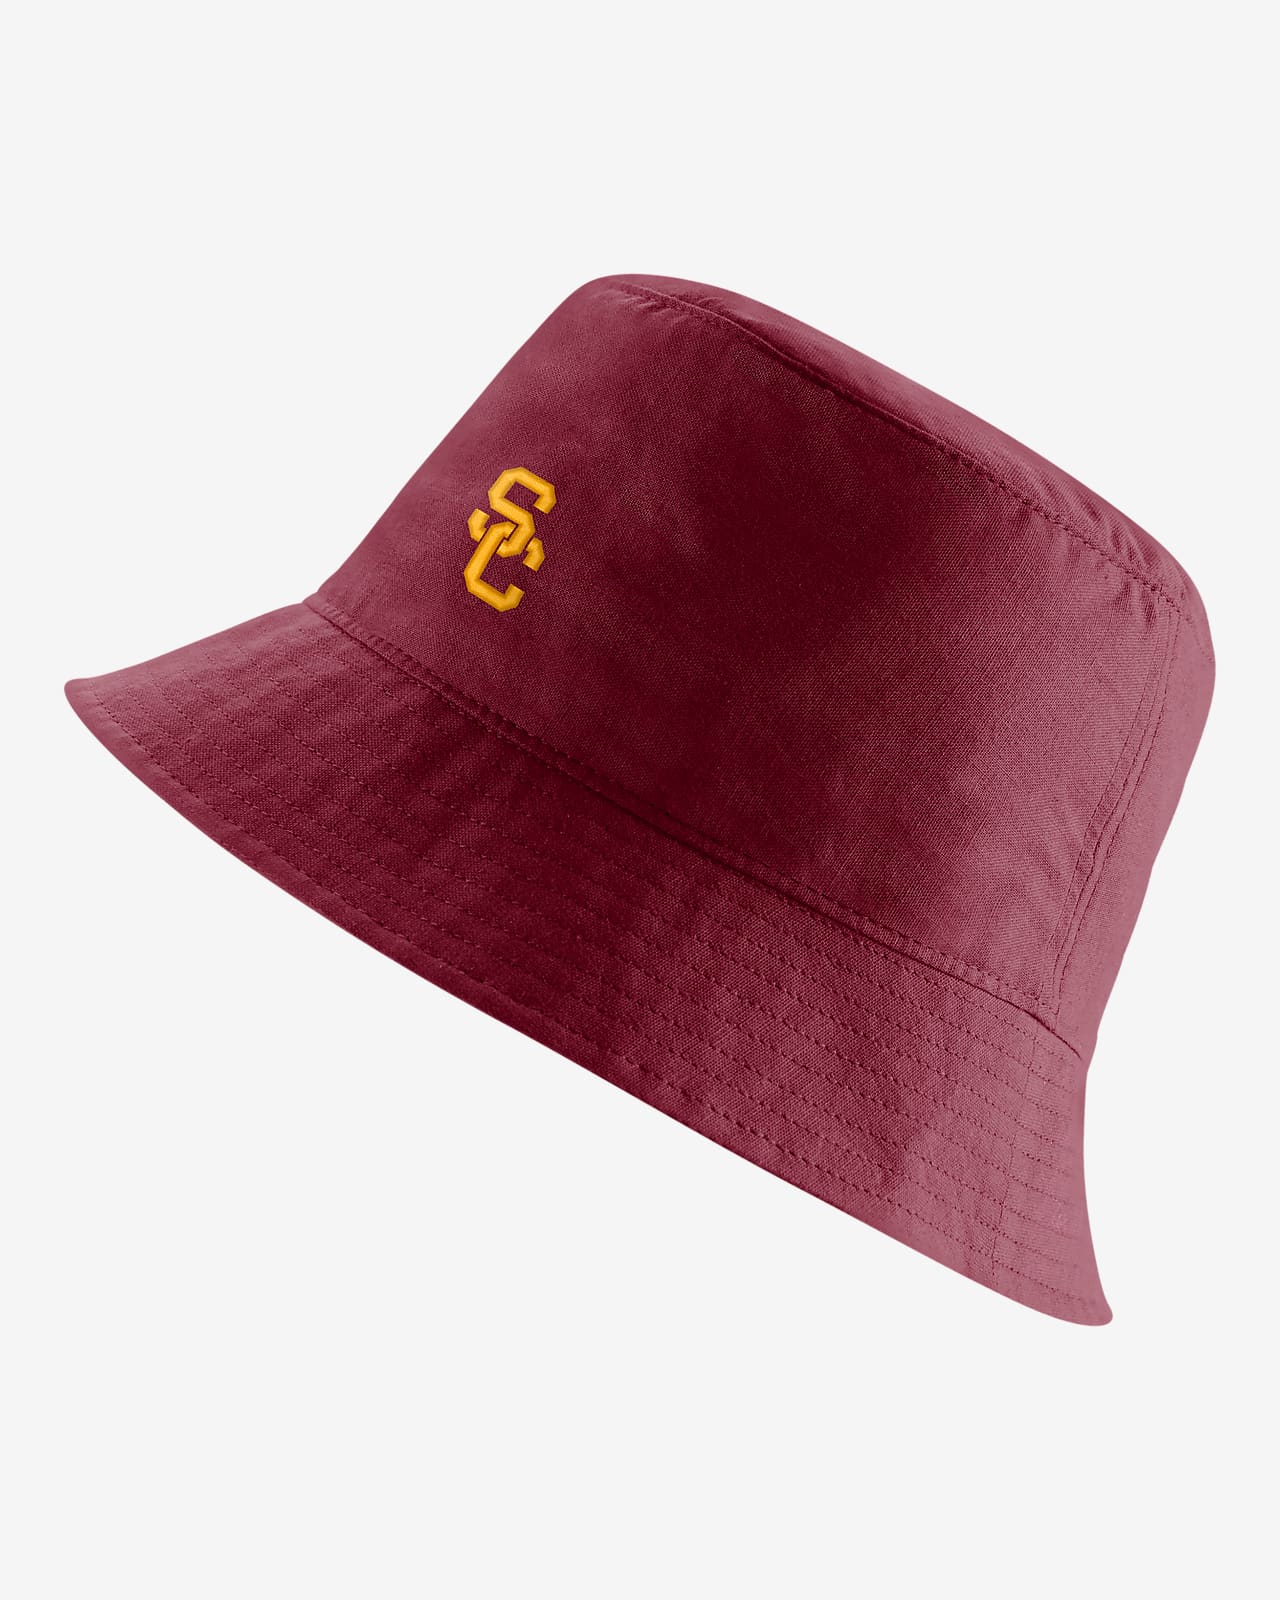 USC Nike College Bucket Hat